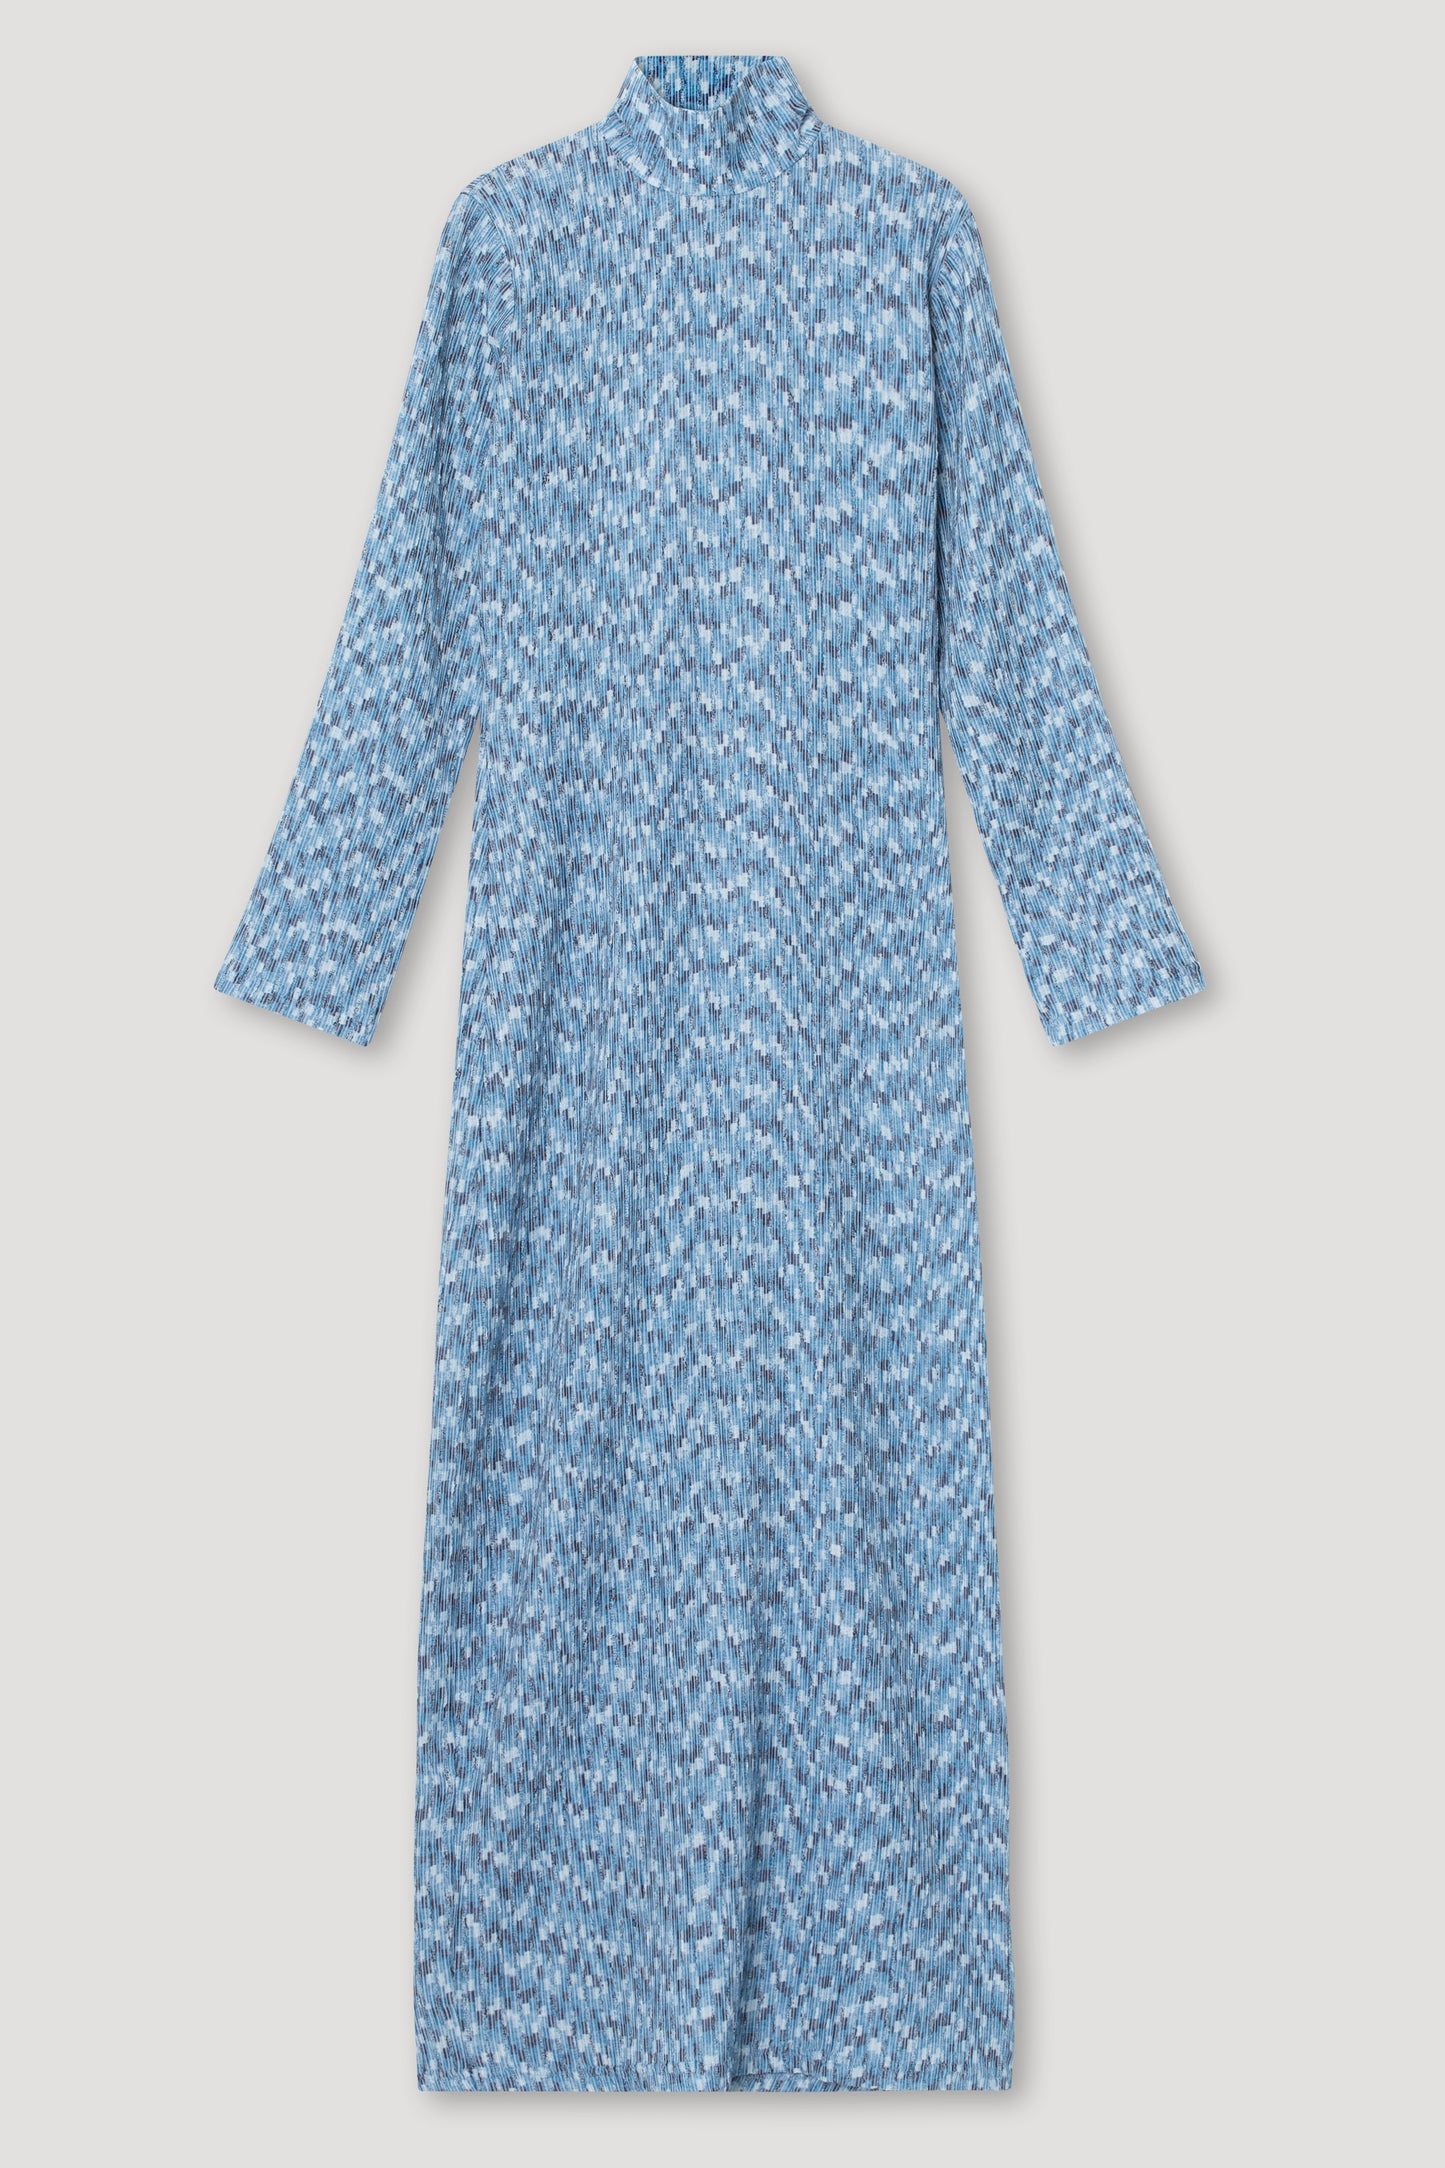 Résumé - Blauwe jurk met vierkant patroon structuur